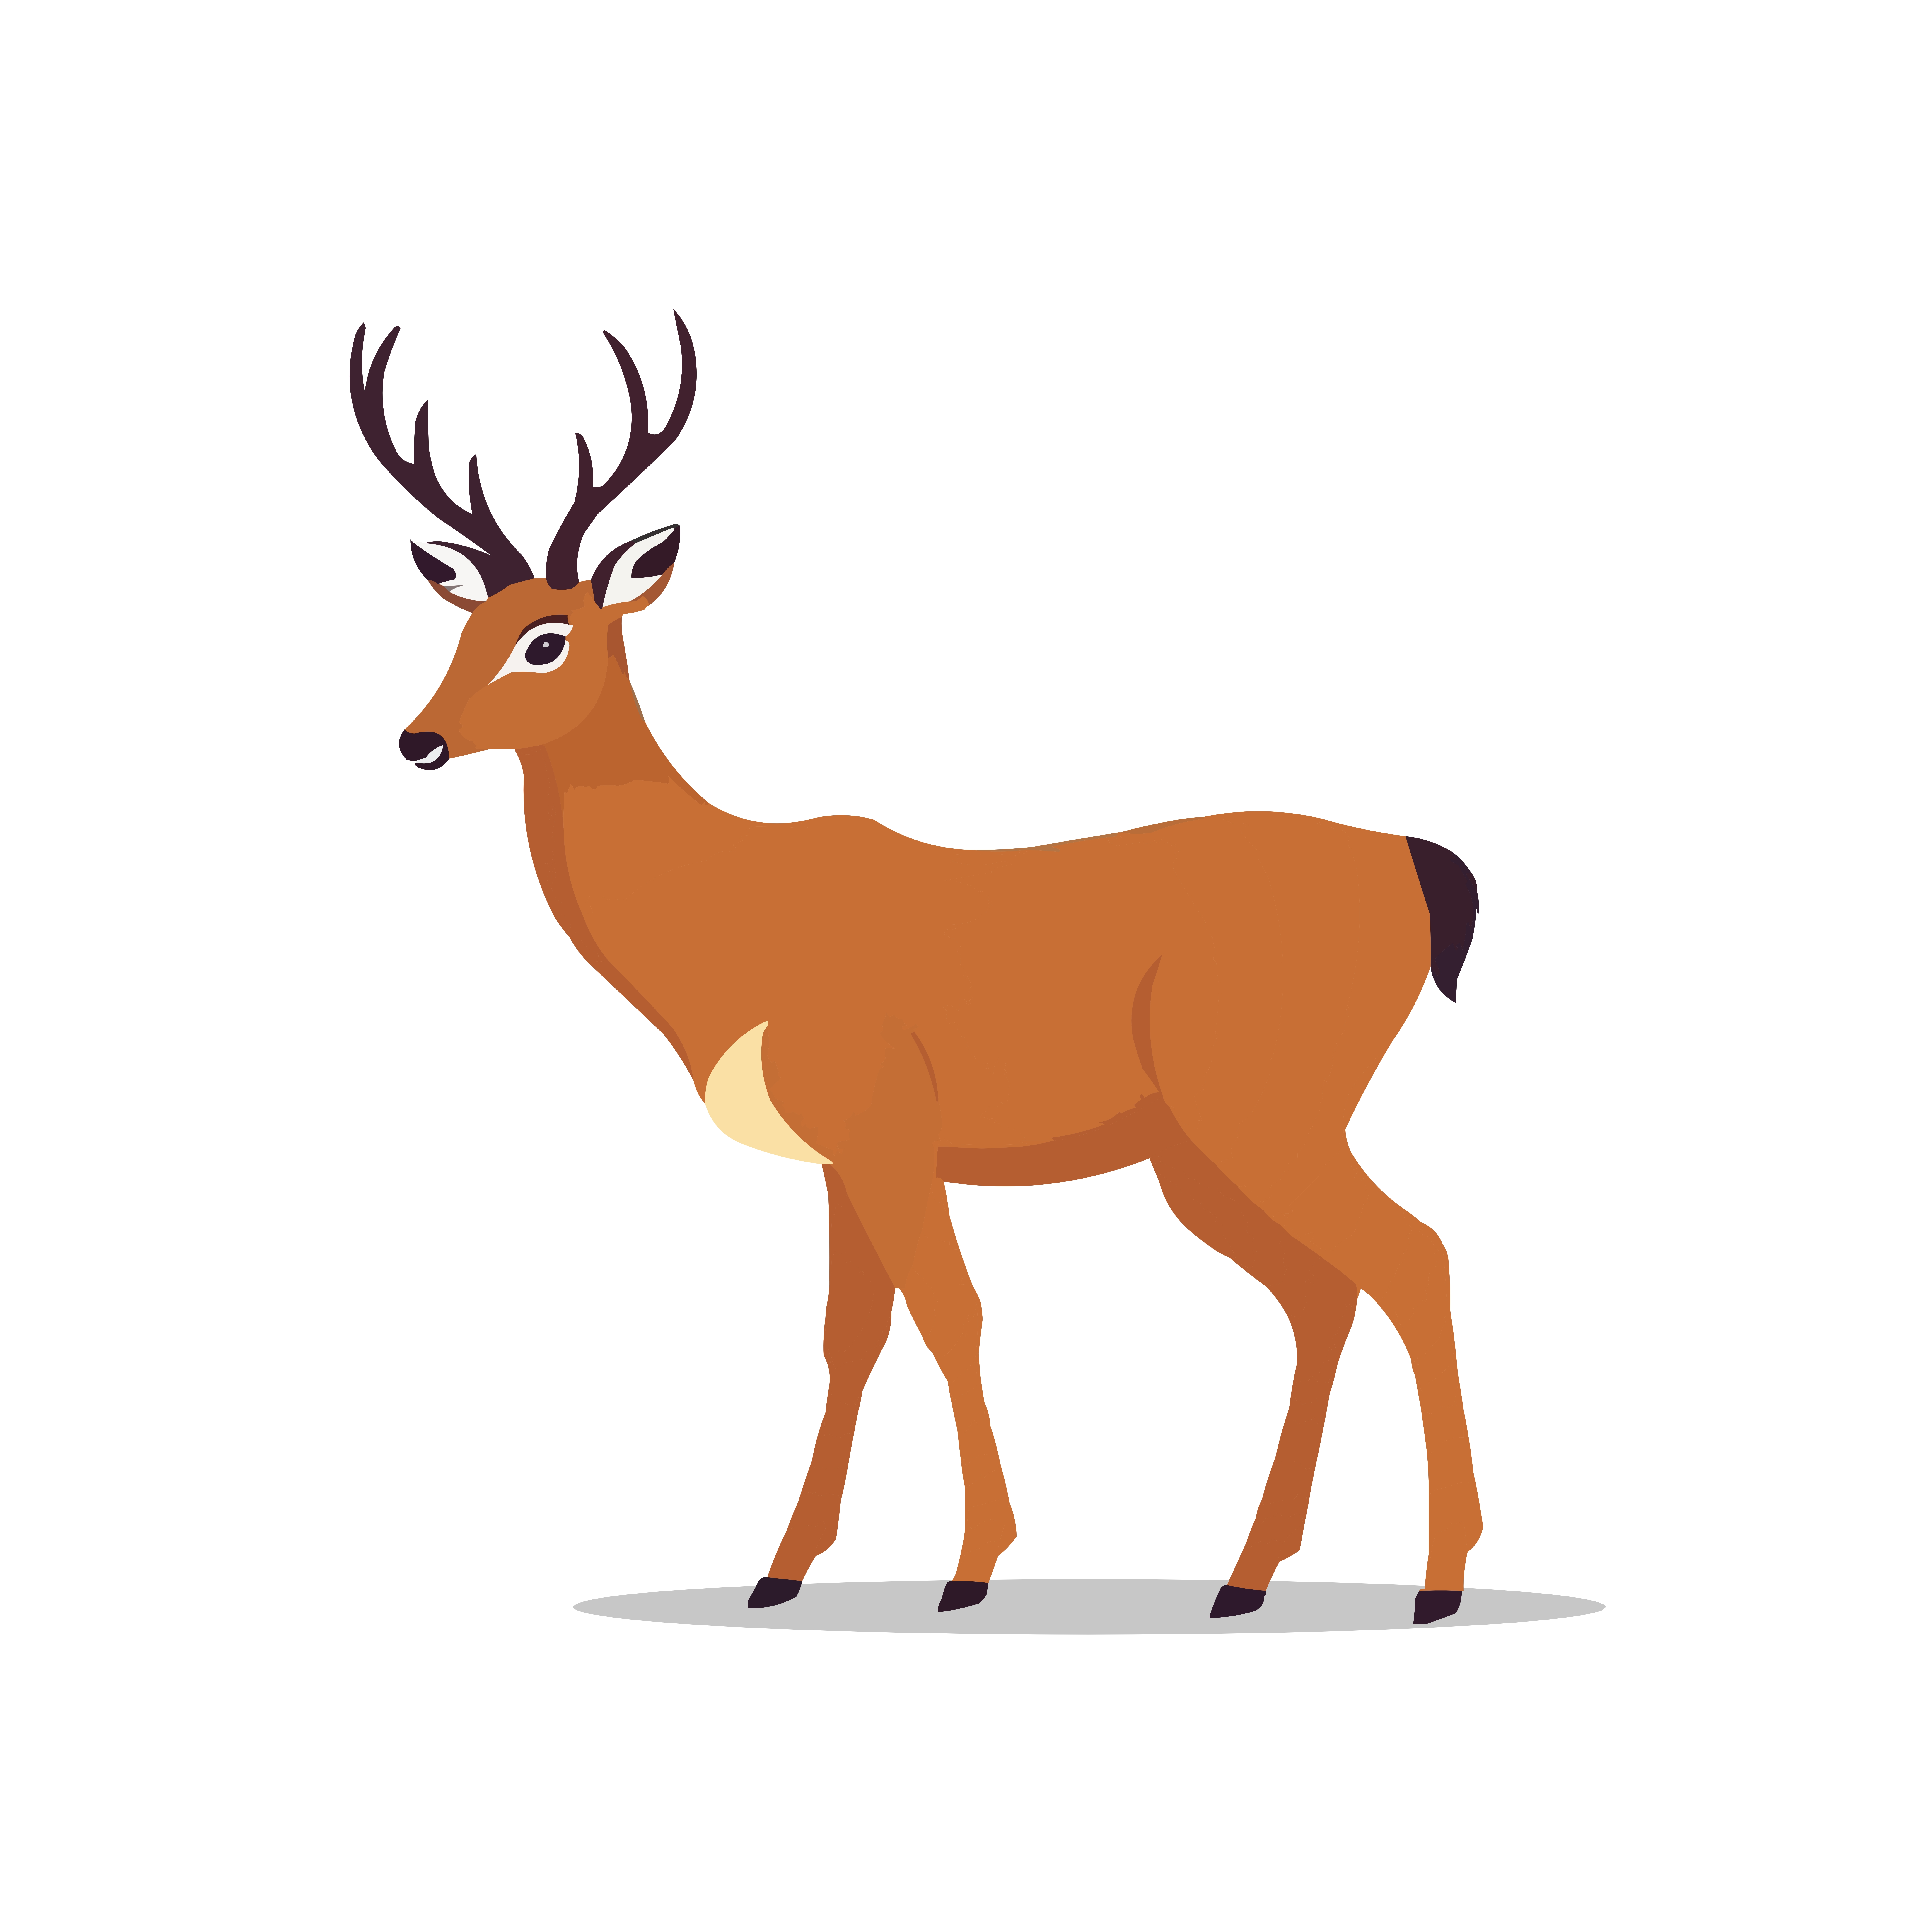 Deer wild animal graphic design